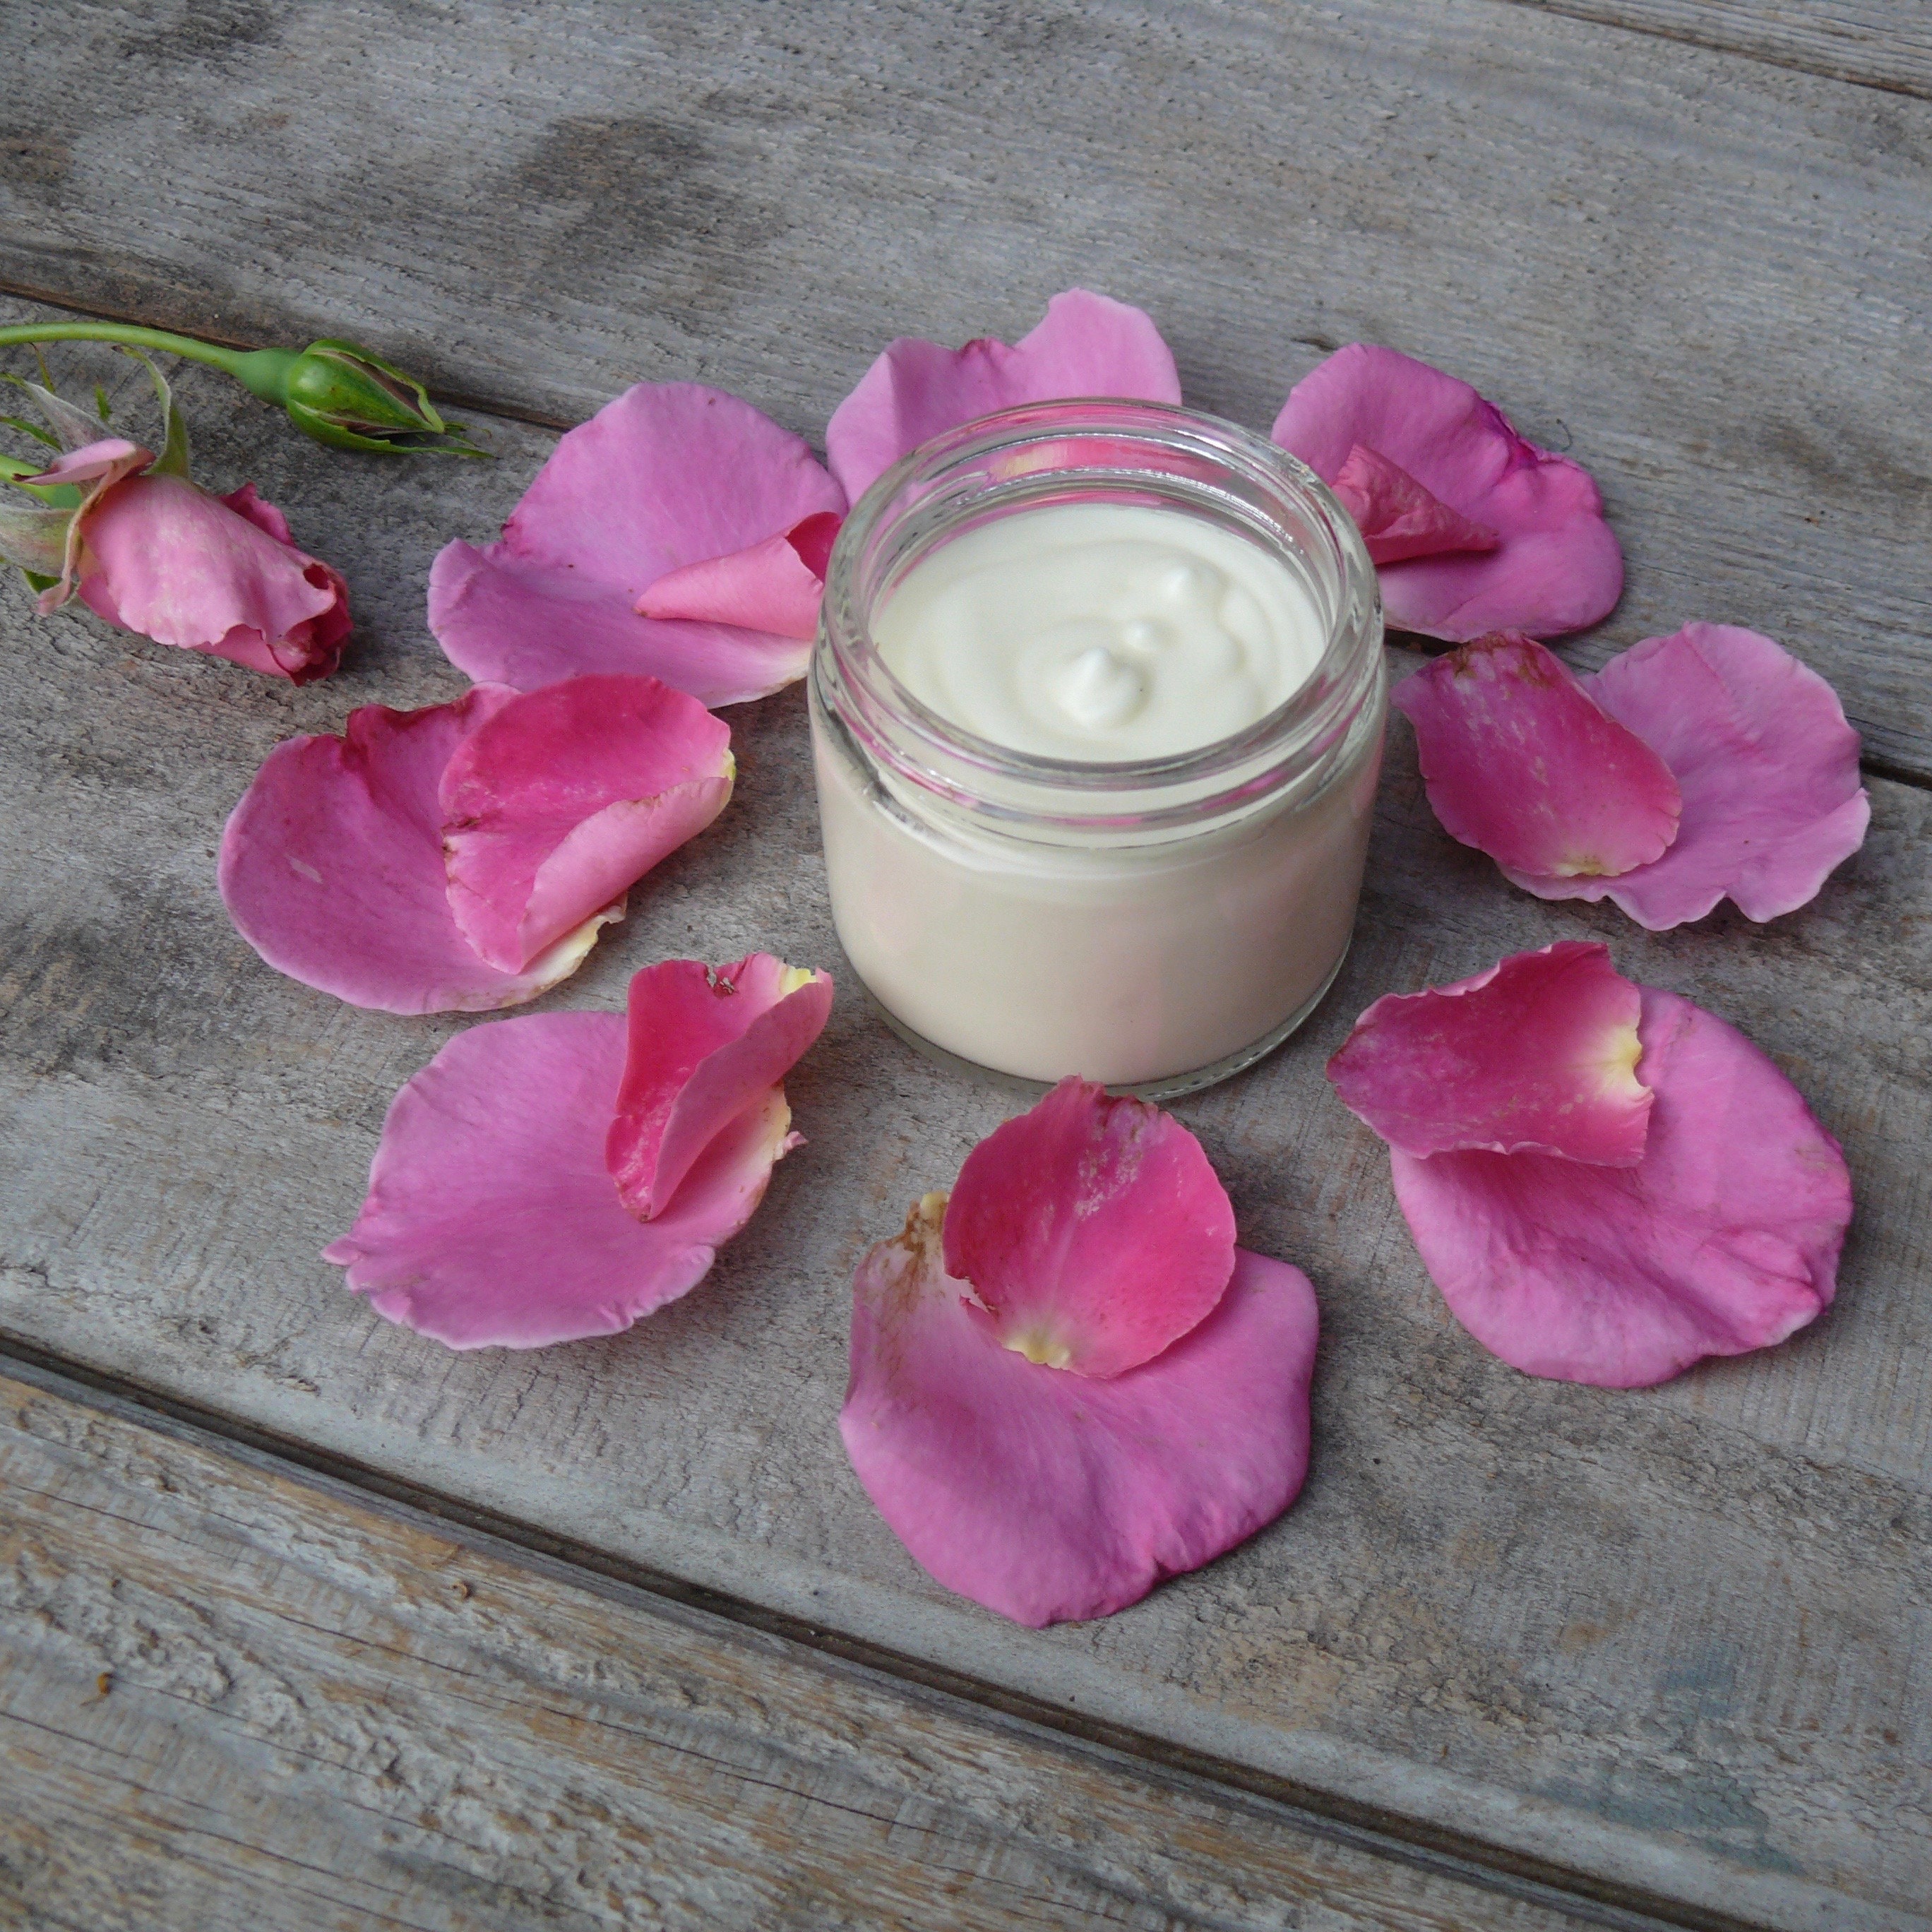 100% Pure Organic Herbs Botanica Natural Rose Petals Powder - 100 grm